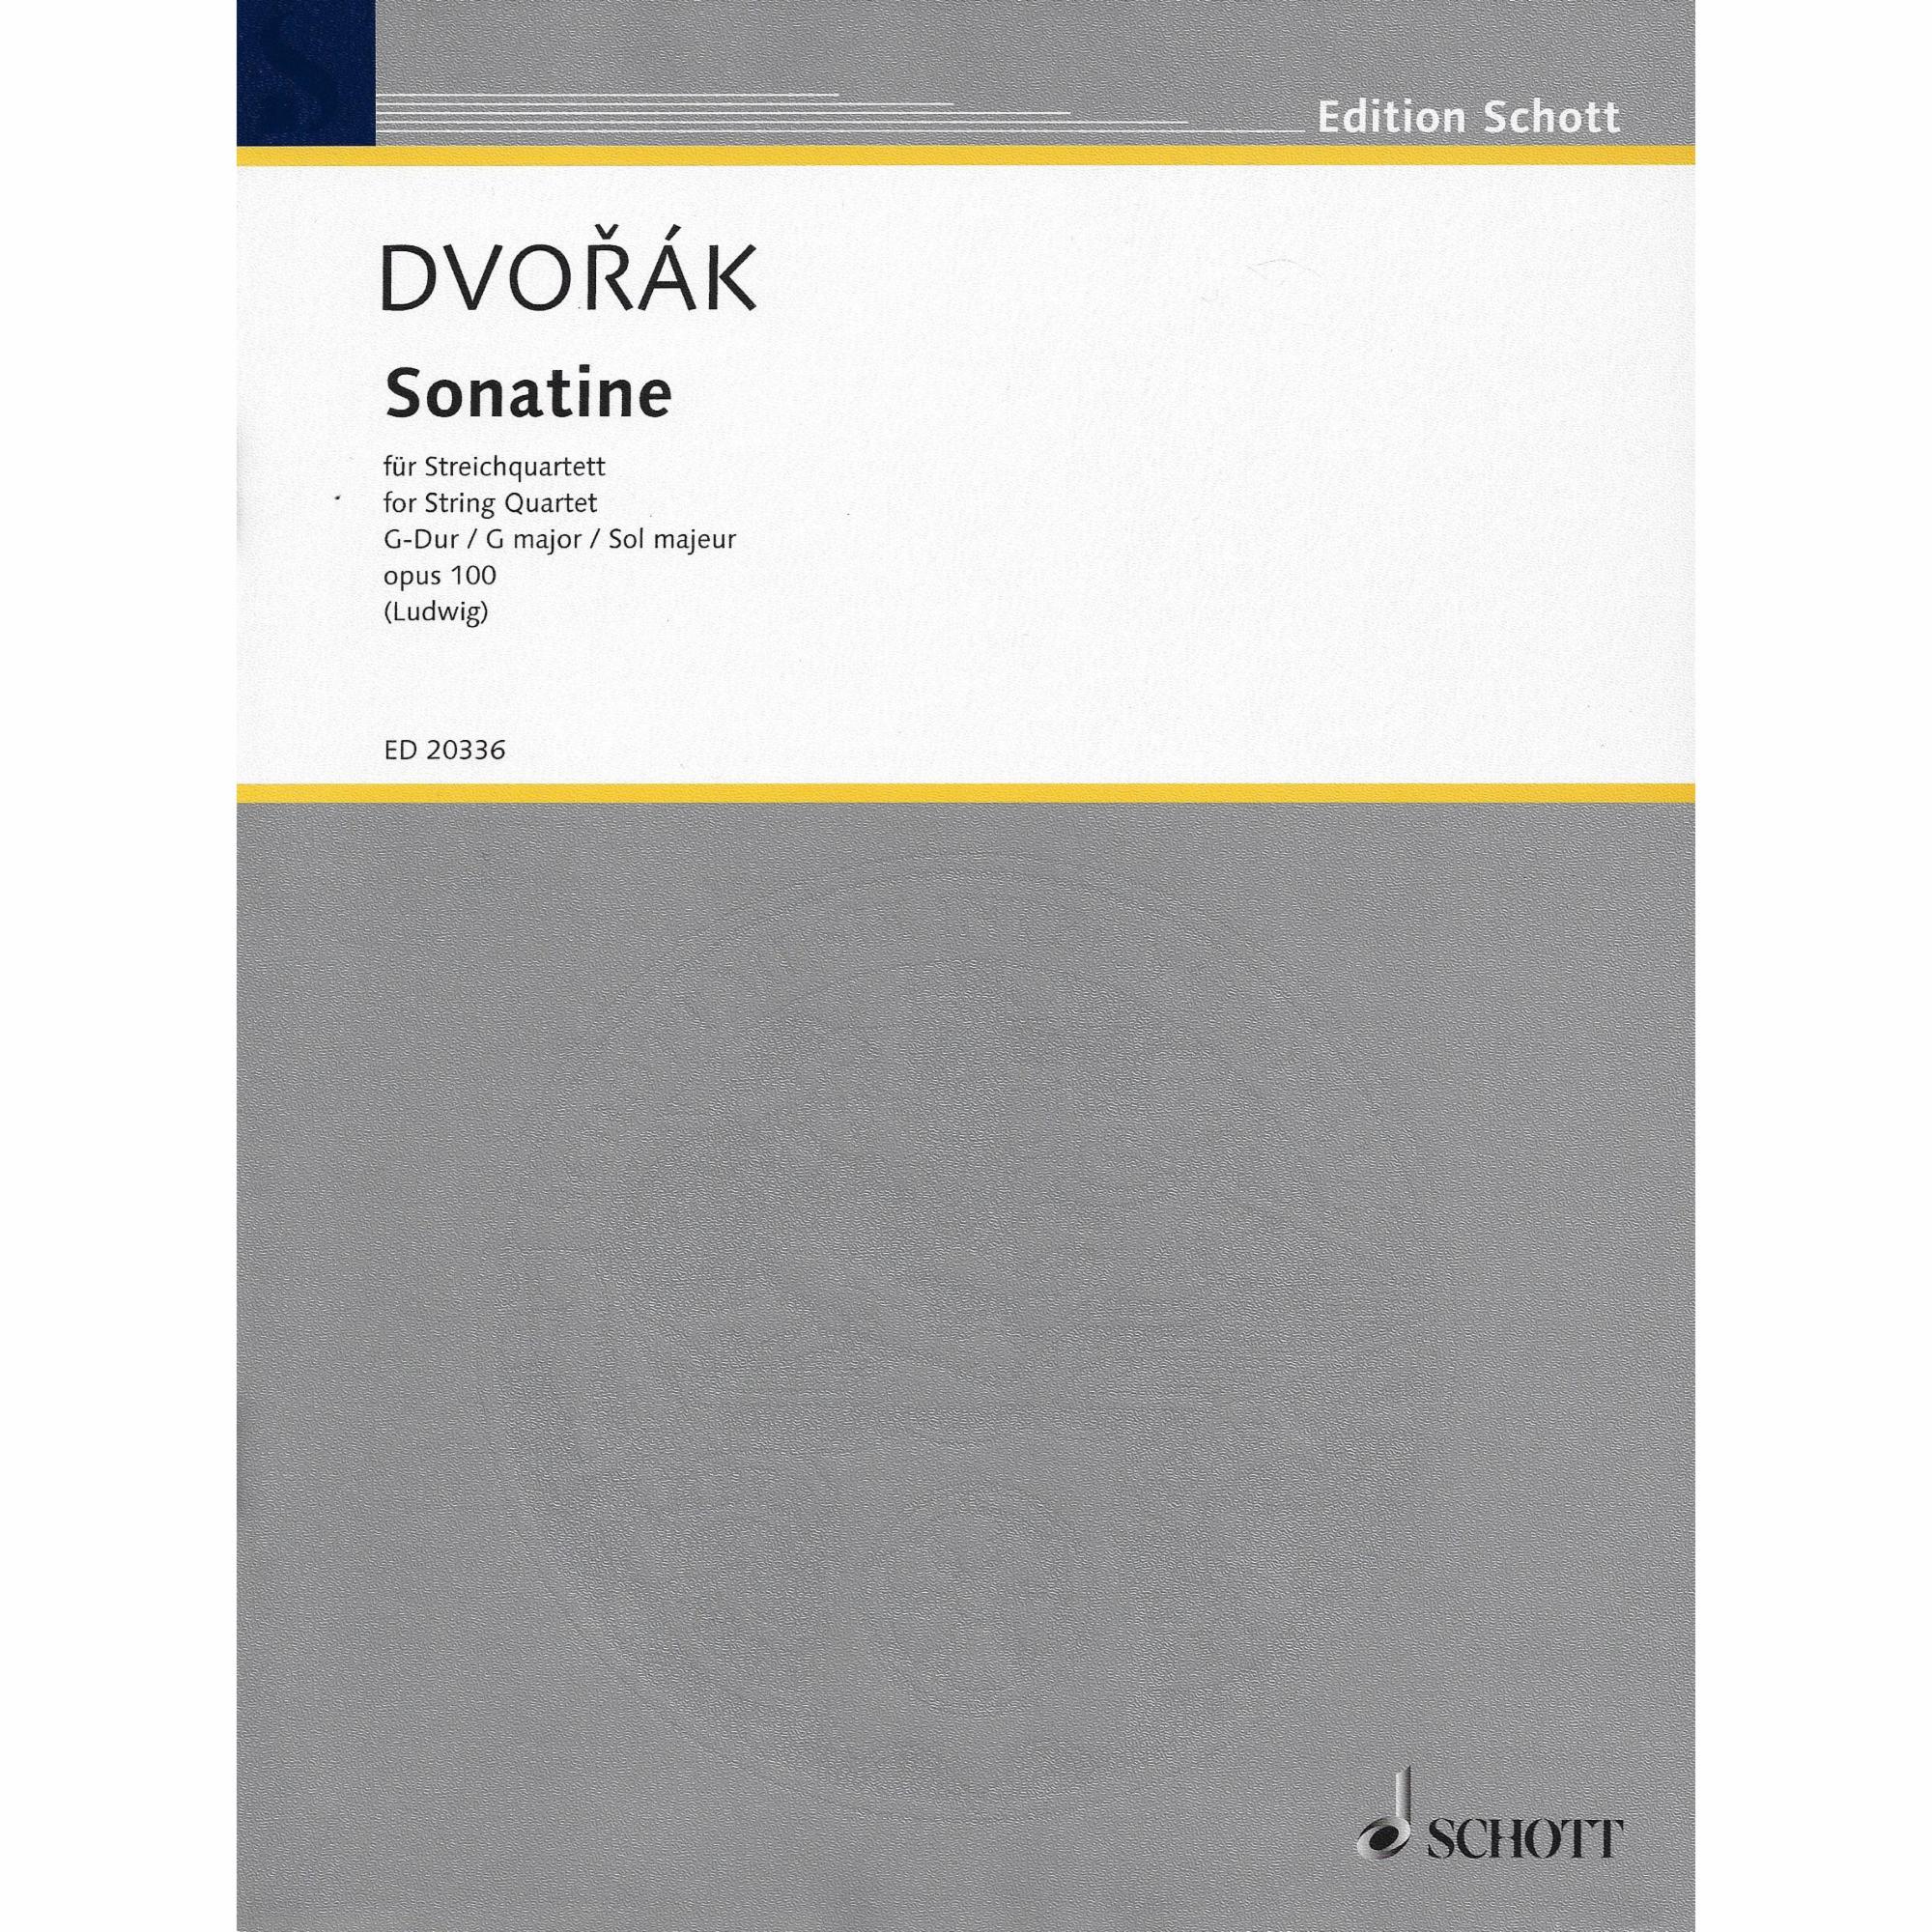 Dvorak -- Sonatina in G Major, Op. 100 for String Quartet